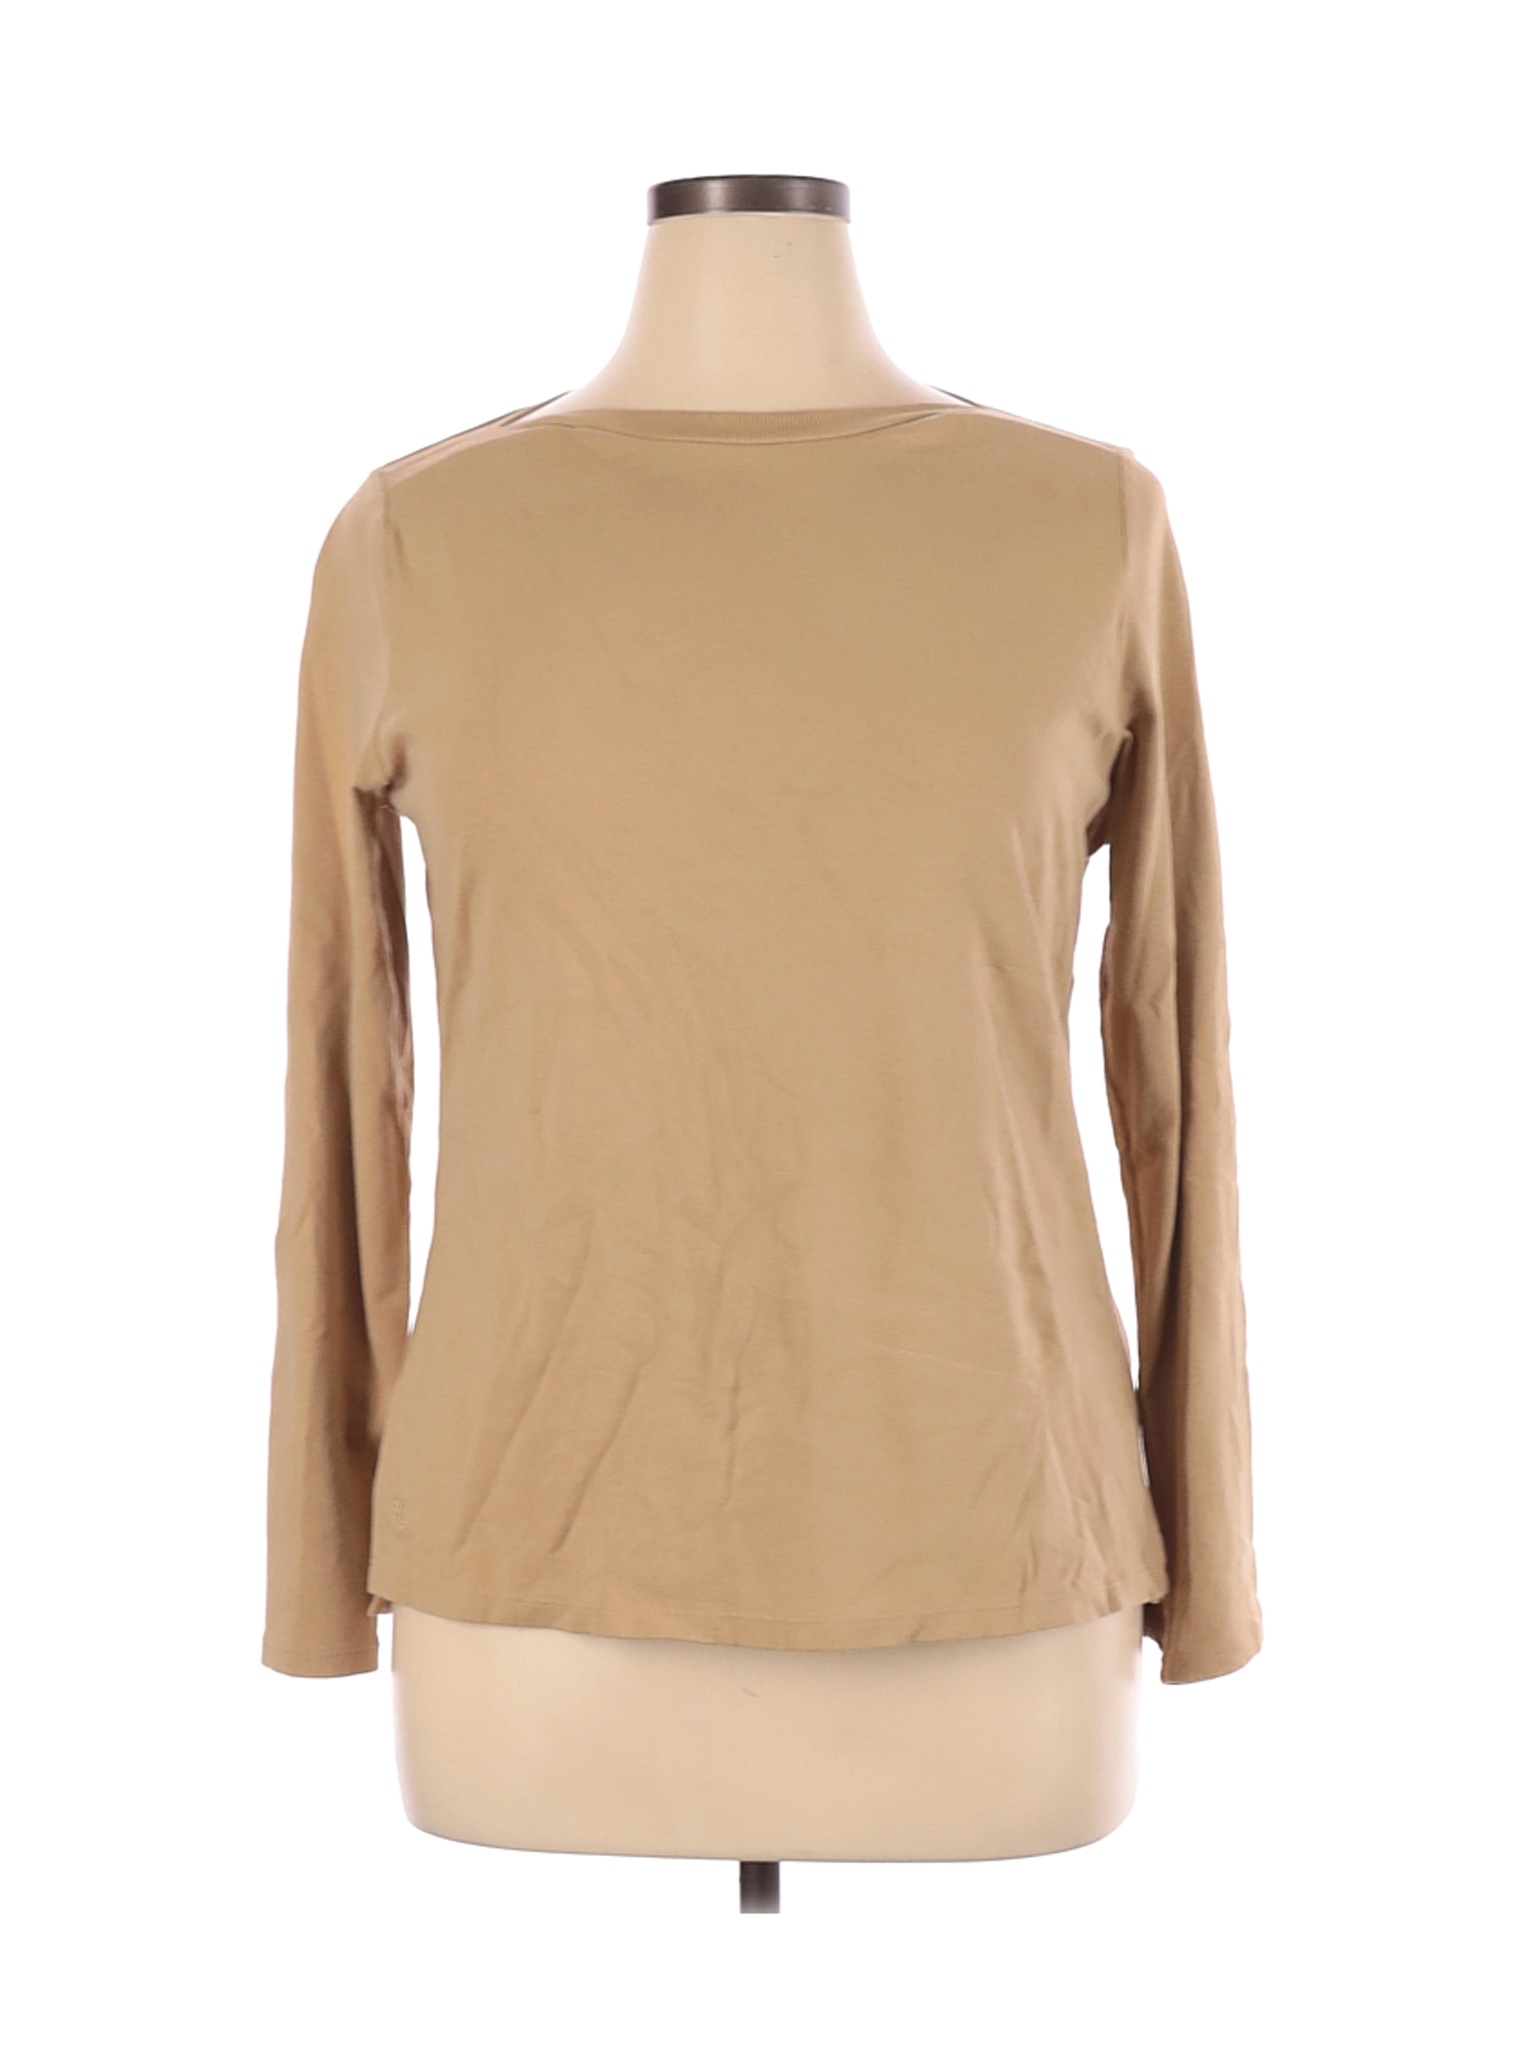 Lauren by Ralph Lauren Women Brown Long Sleeve T-Shirt 1X Plus | eBay